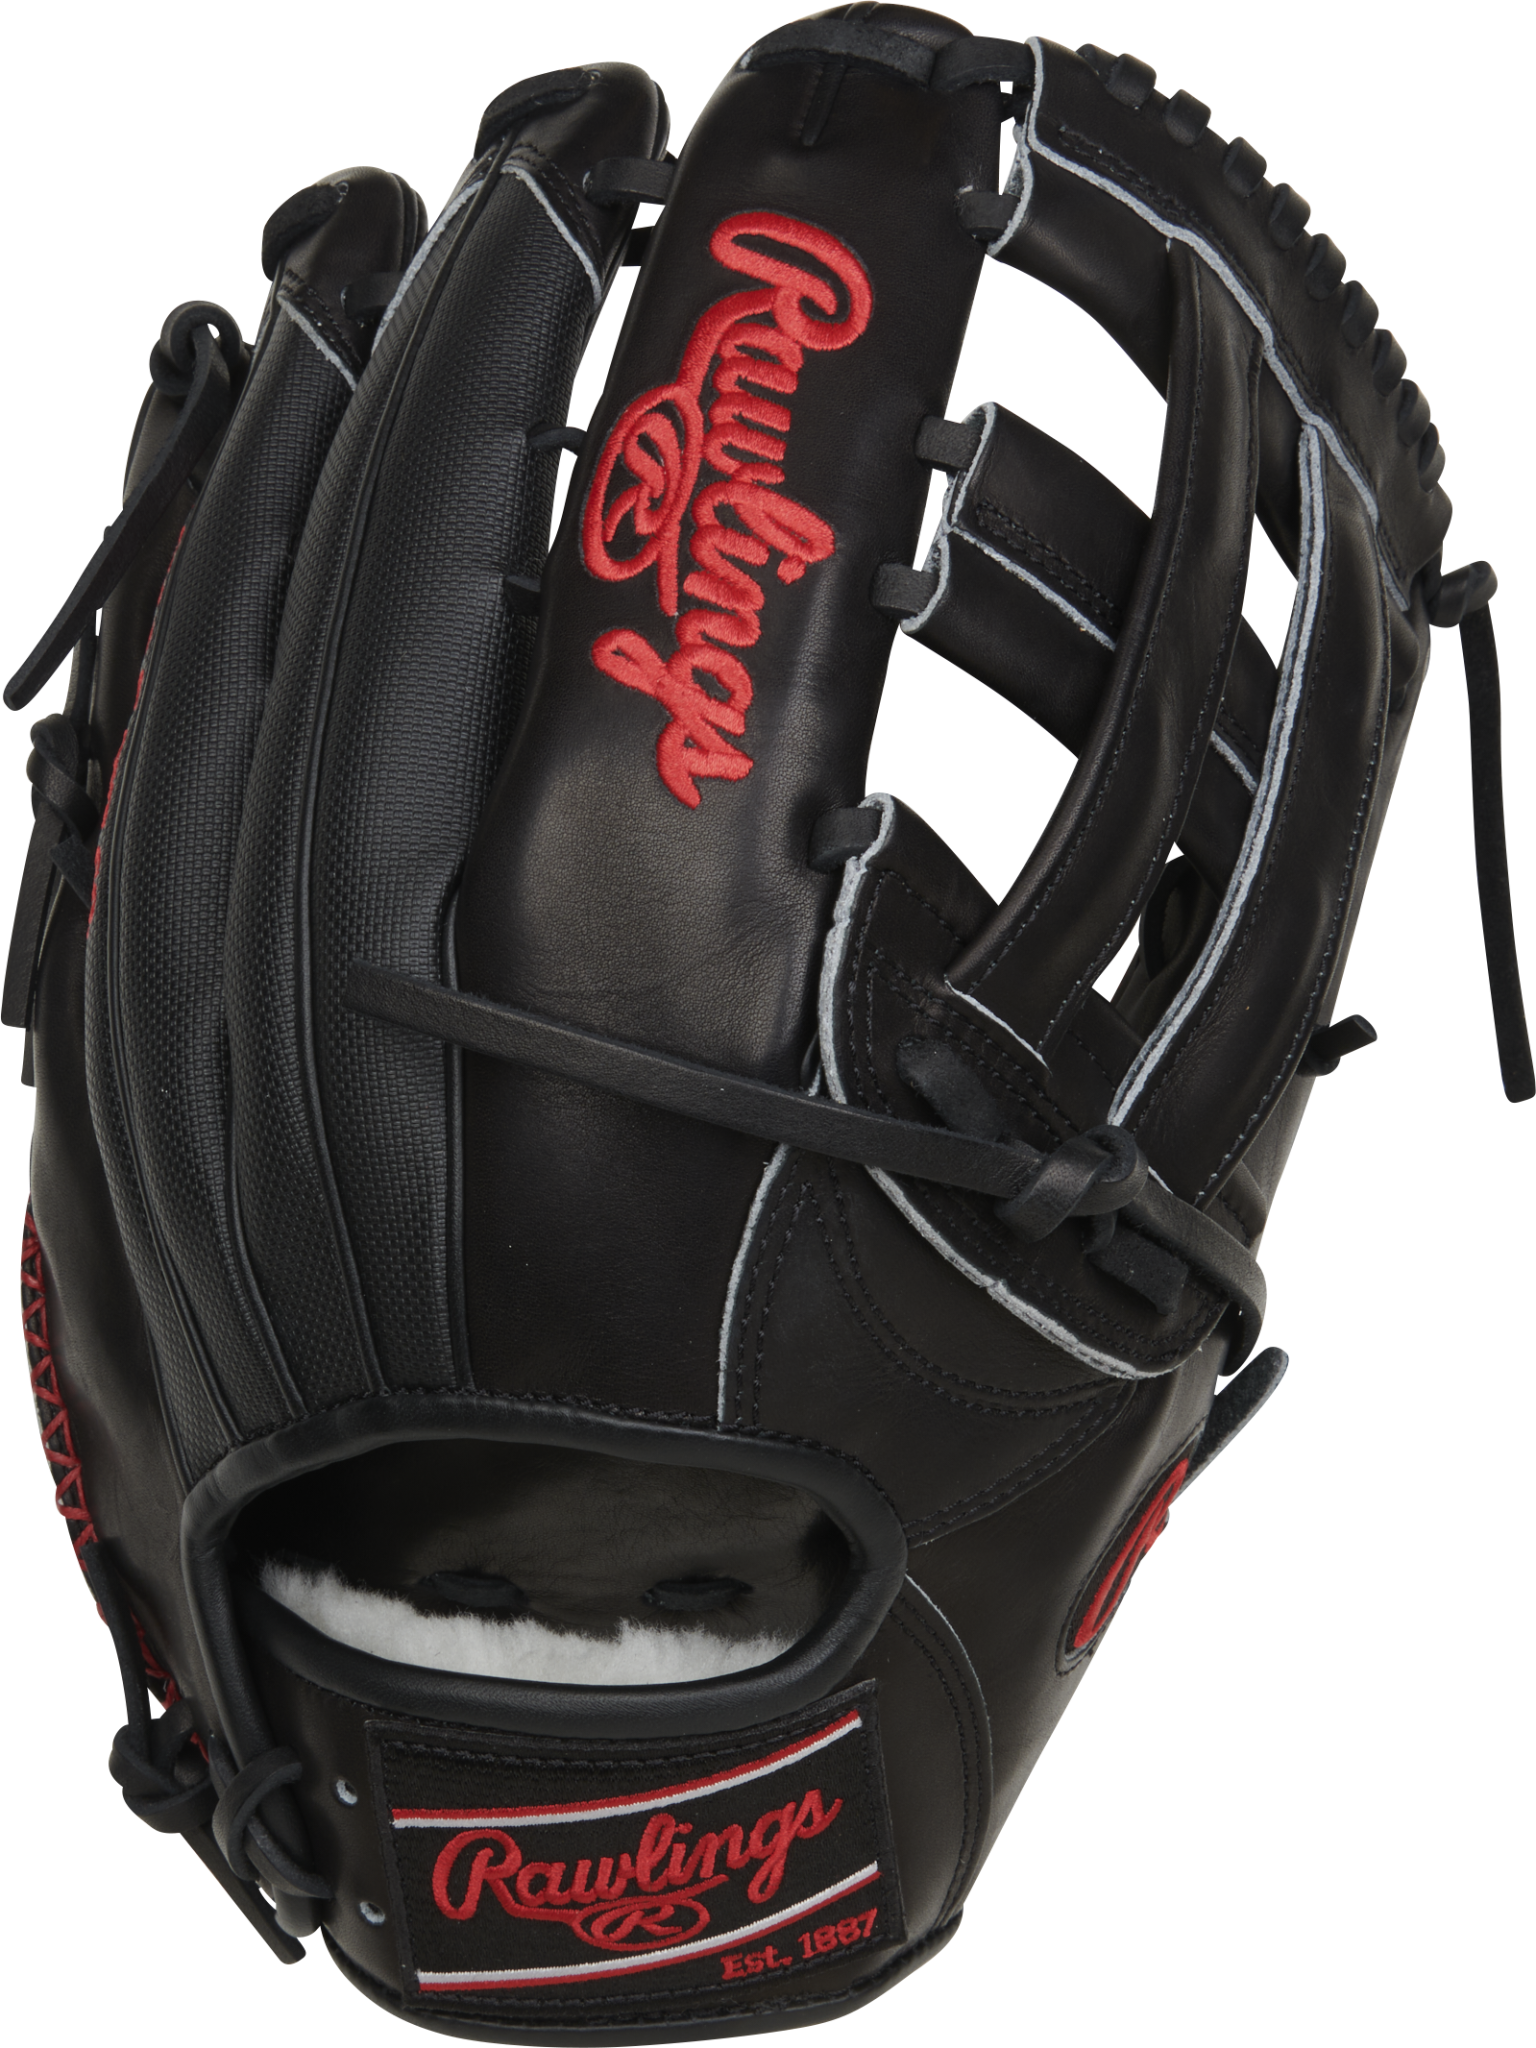 Shop Baseball Gloves & Mitts